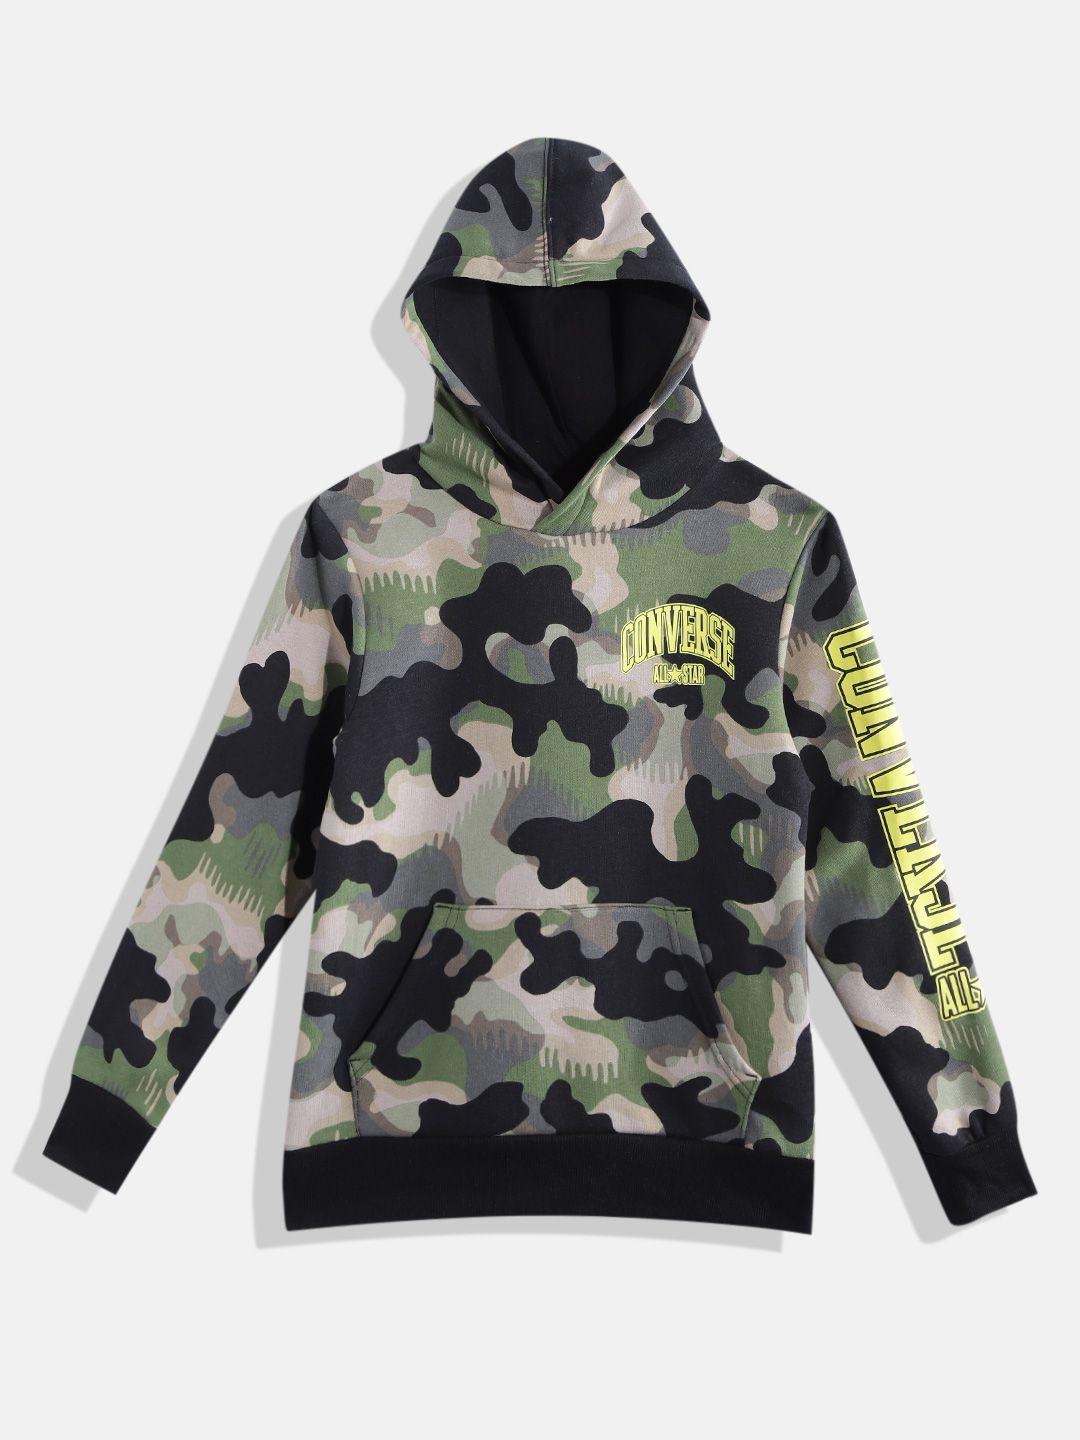 converse black & green camo fleece pullover hoodie